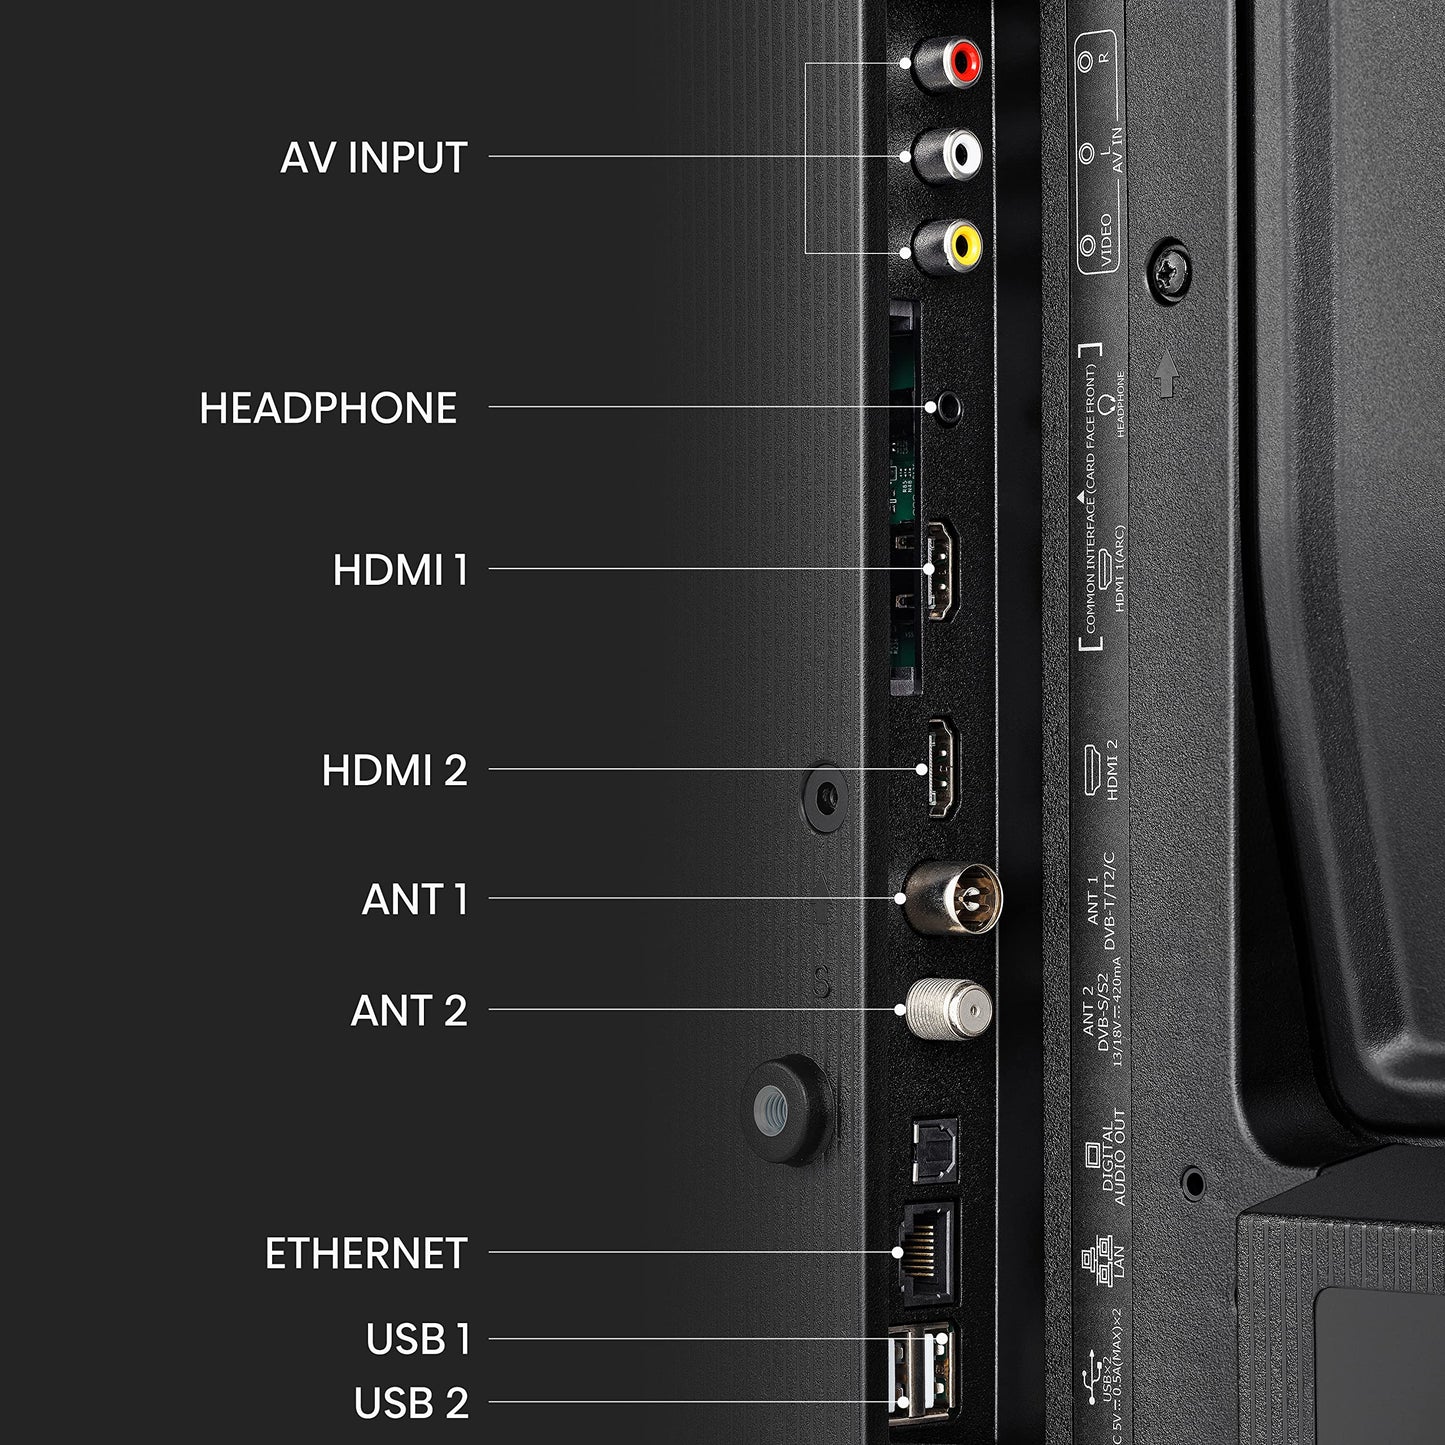 Hisense 40 Inch FHD VIDAA Smart TV 40A4KTUK - Natural Enhancer, HDMI, Share to TV, and Youtube, Freeview Play, Netflix and Disney+ (2023 New Model), Operating System VIDAA